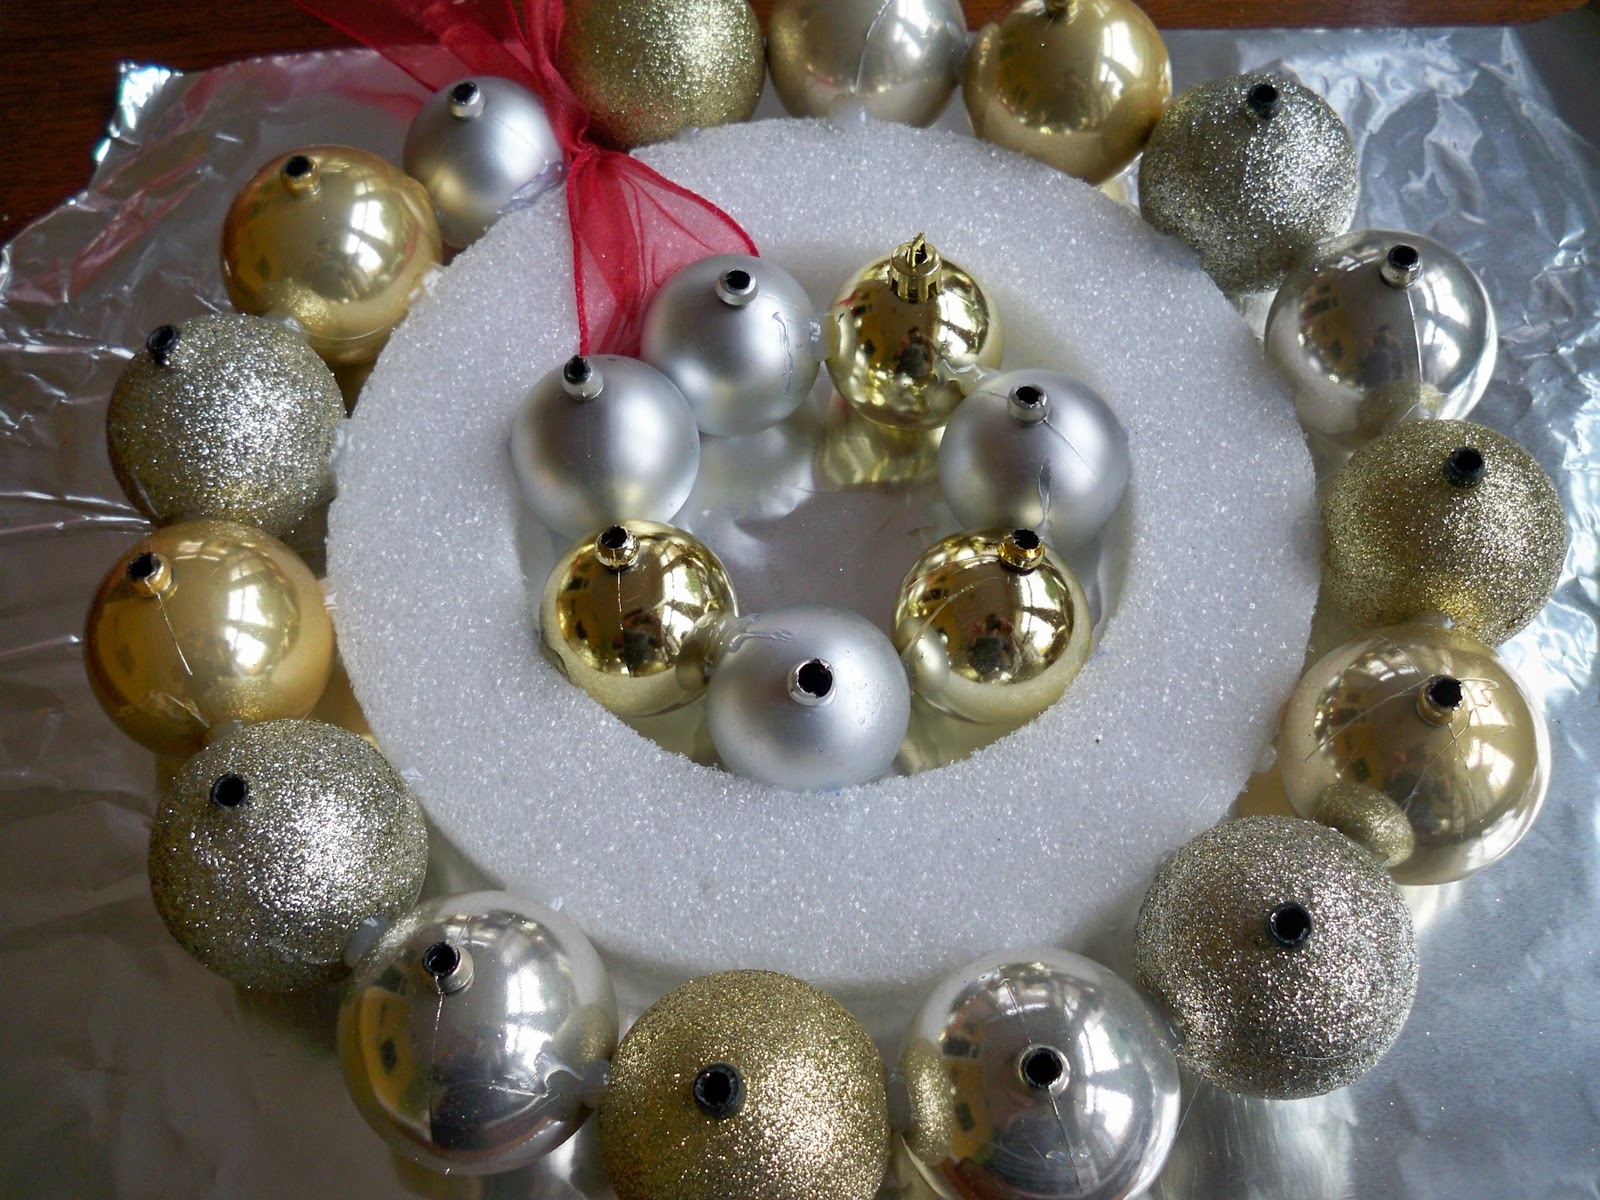 Ball+ornament+wreath